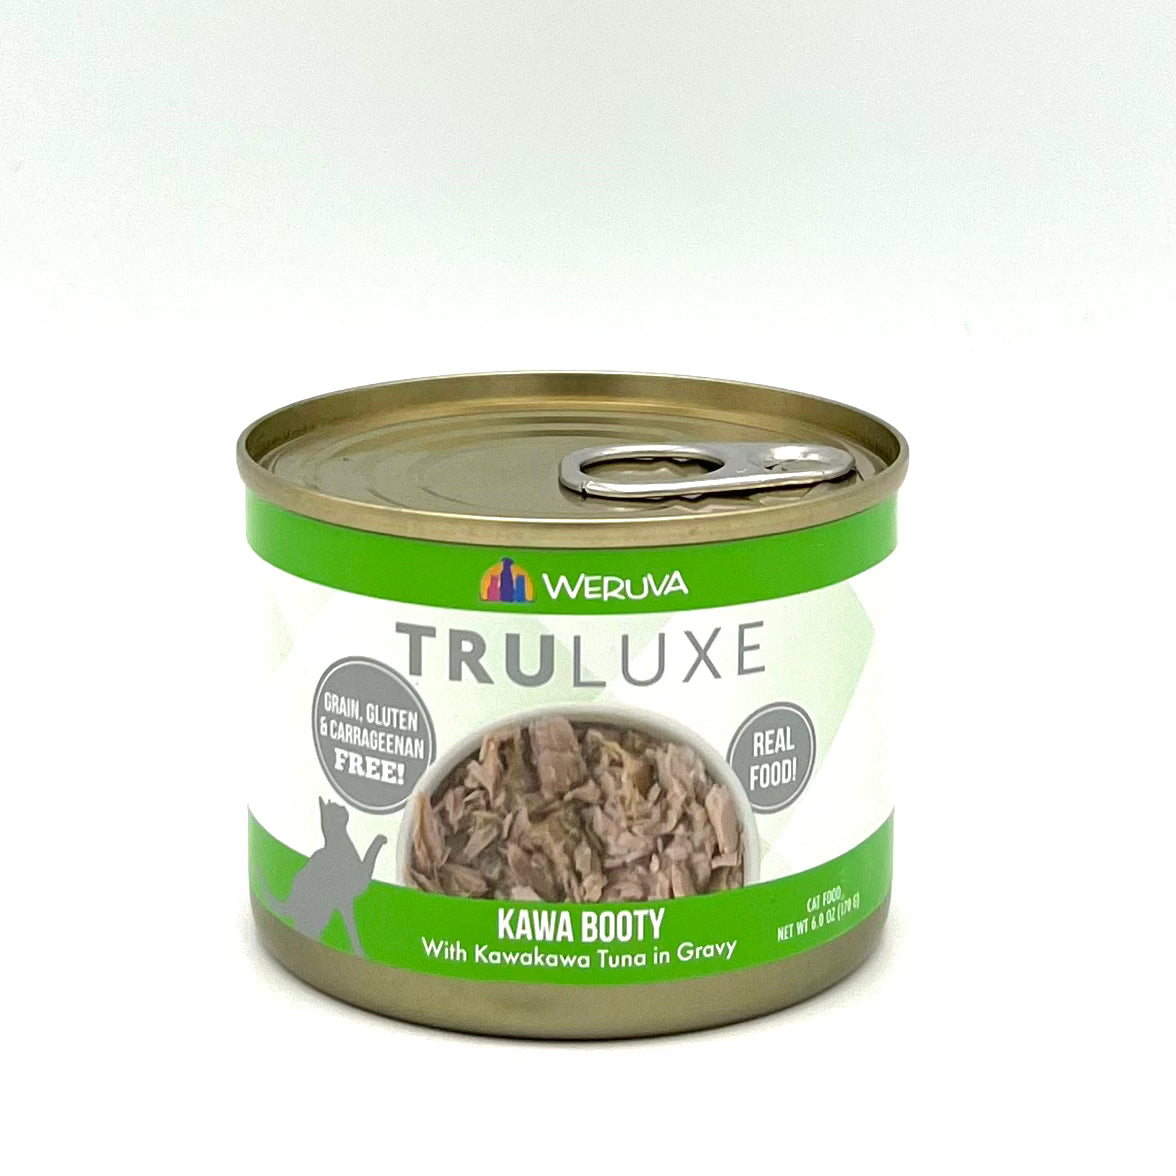 Weruva Truluxe Kawa Booty Canned Cat Food 6.0 oz